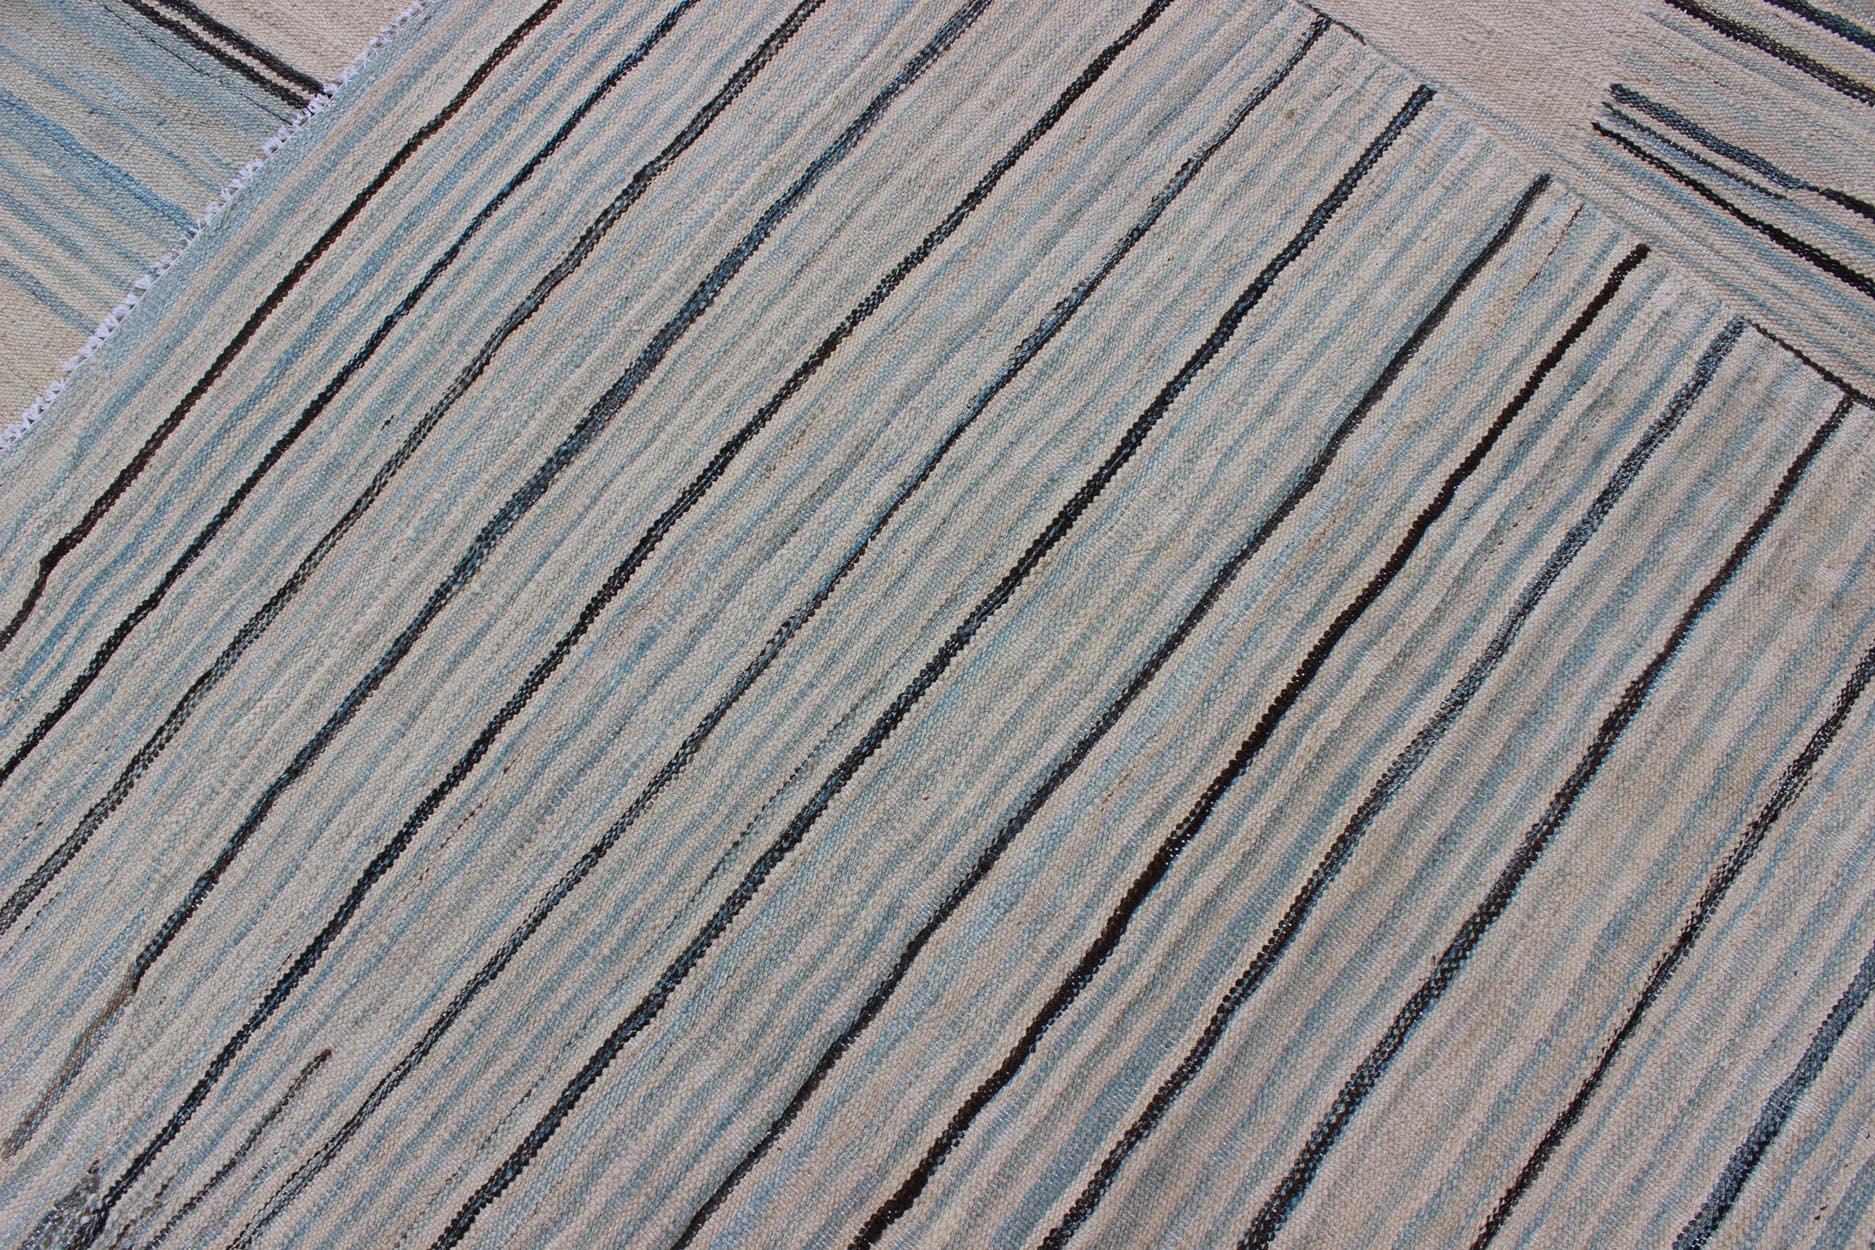 Modern Flat-Weave Kilim Rug in Three Panel Striped Design in Ocean Blue & Taupe 7